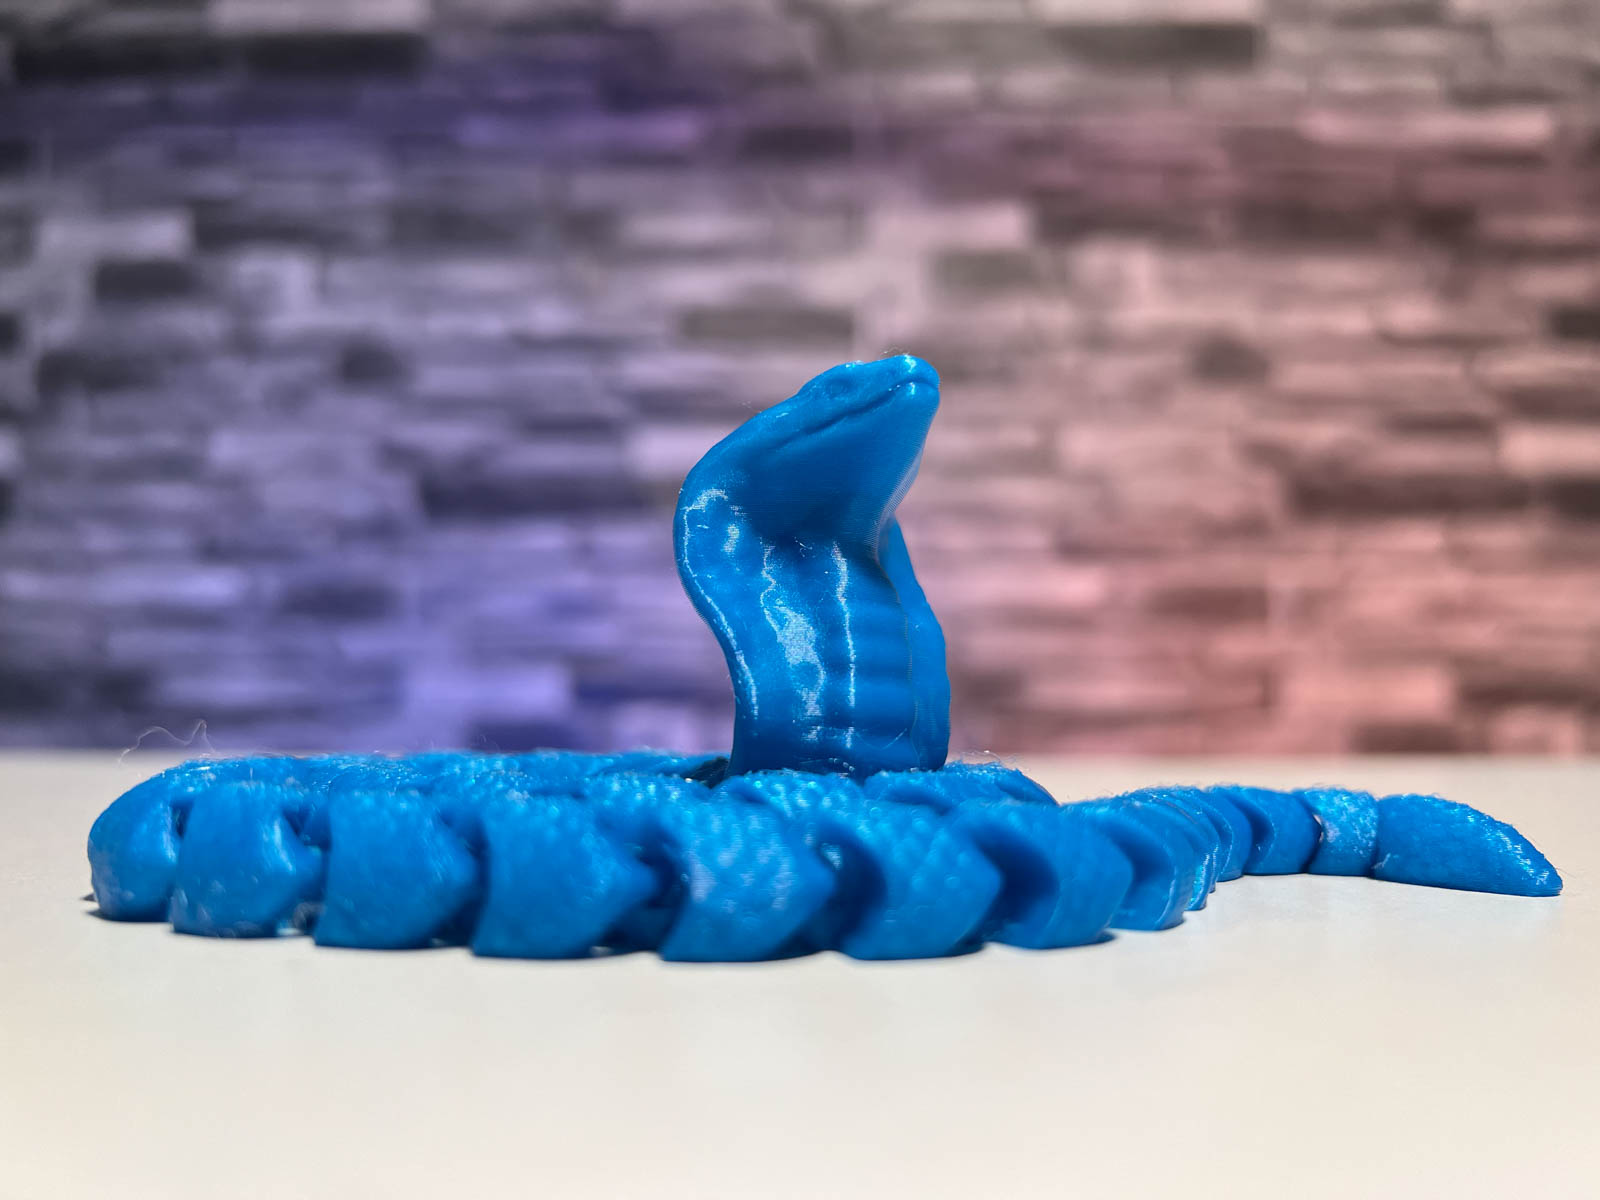 3D Printed Cobra Snake